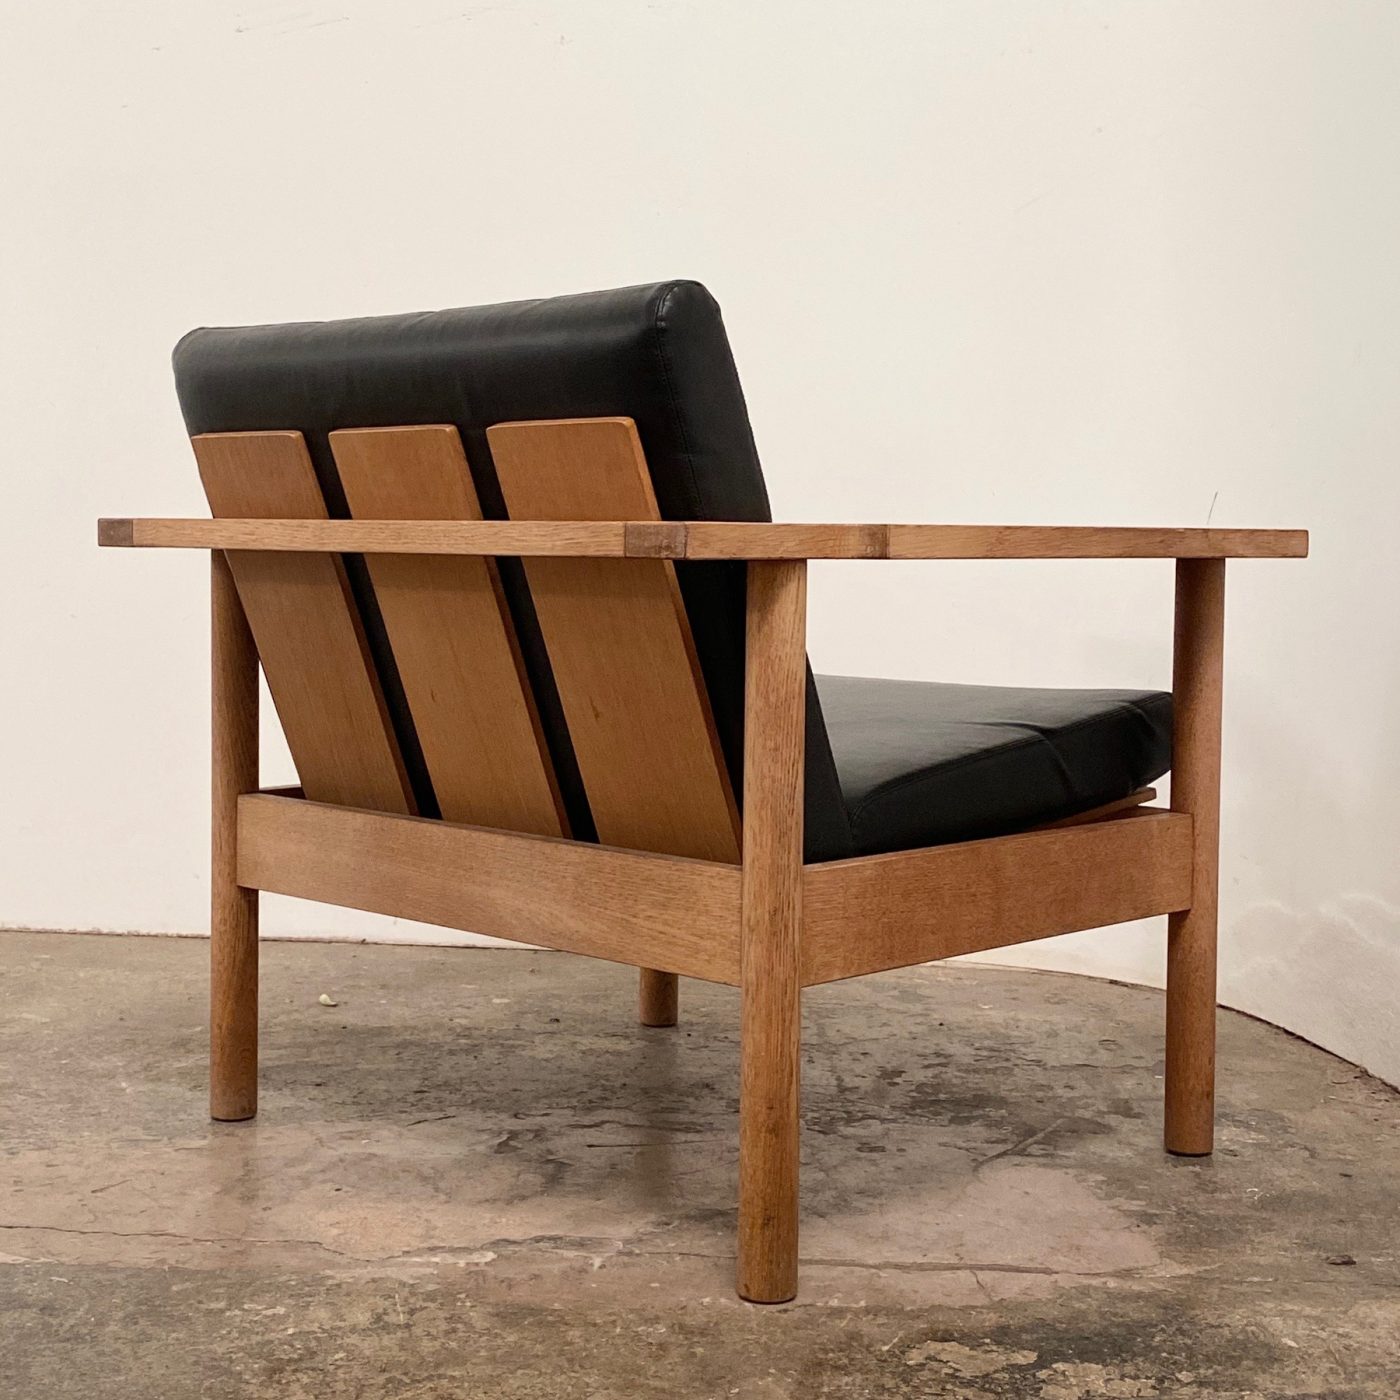 objet-vagabond-danish-chairs0011